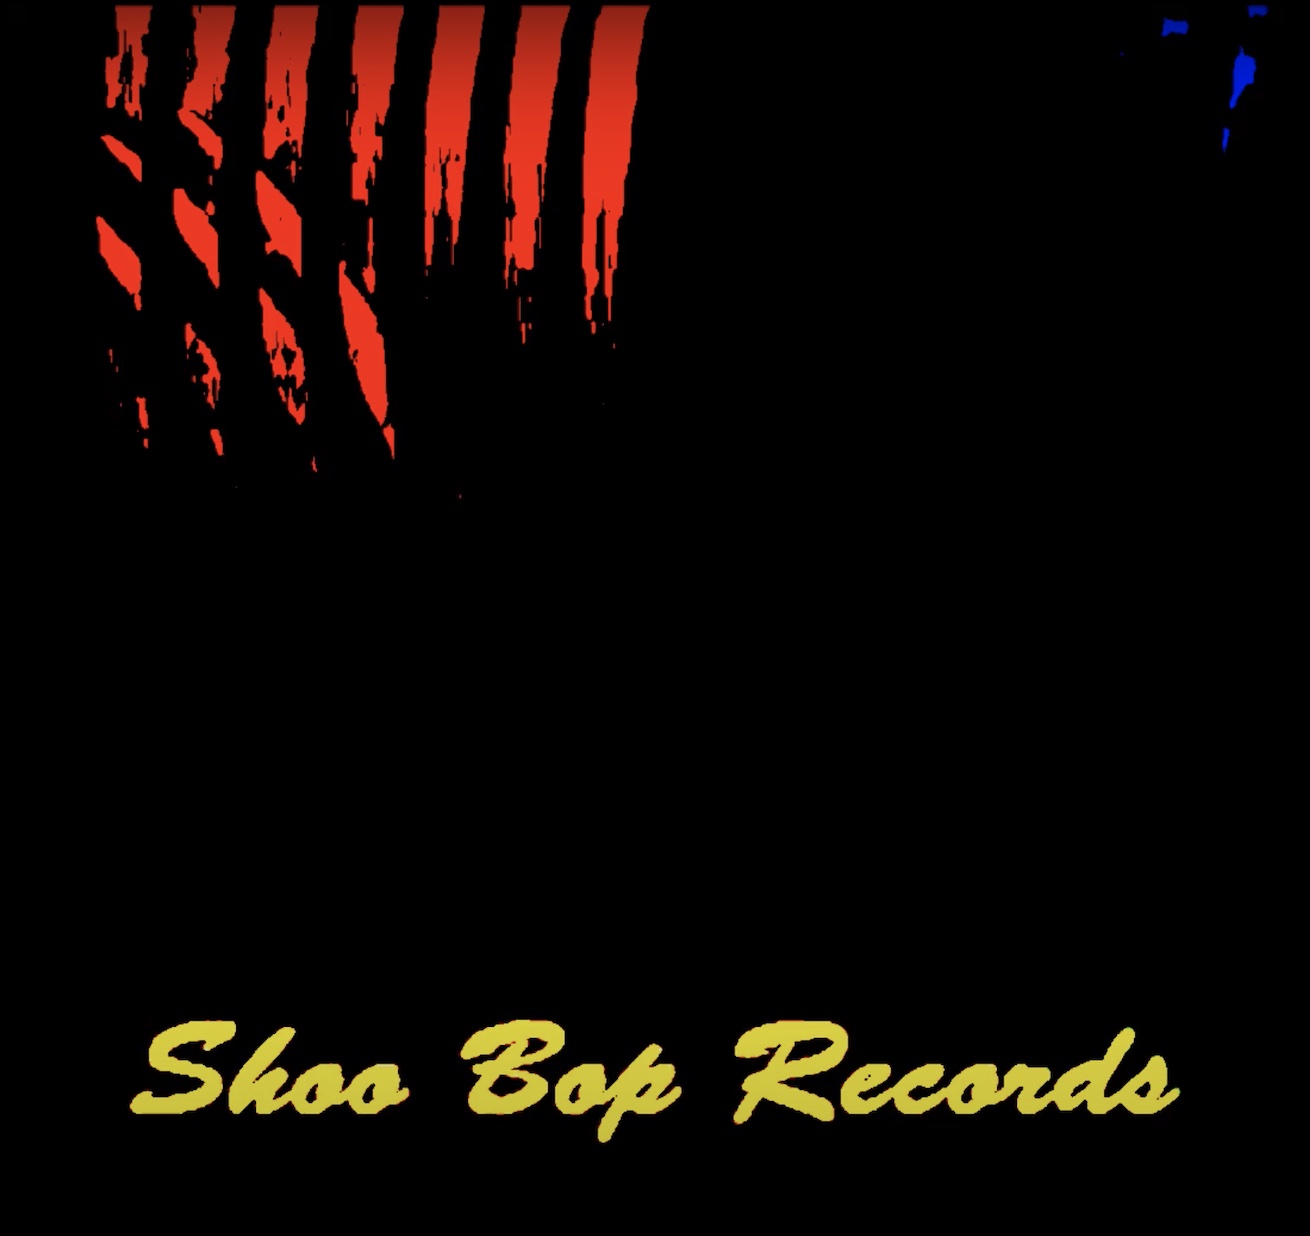 Shoo Bop Records logo